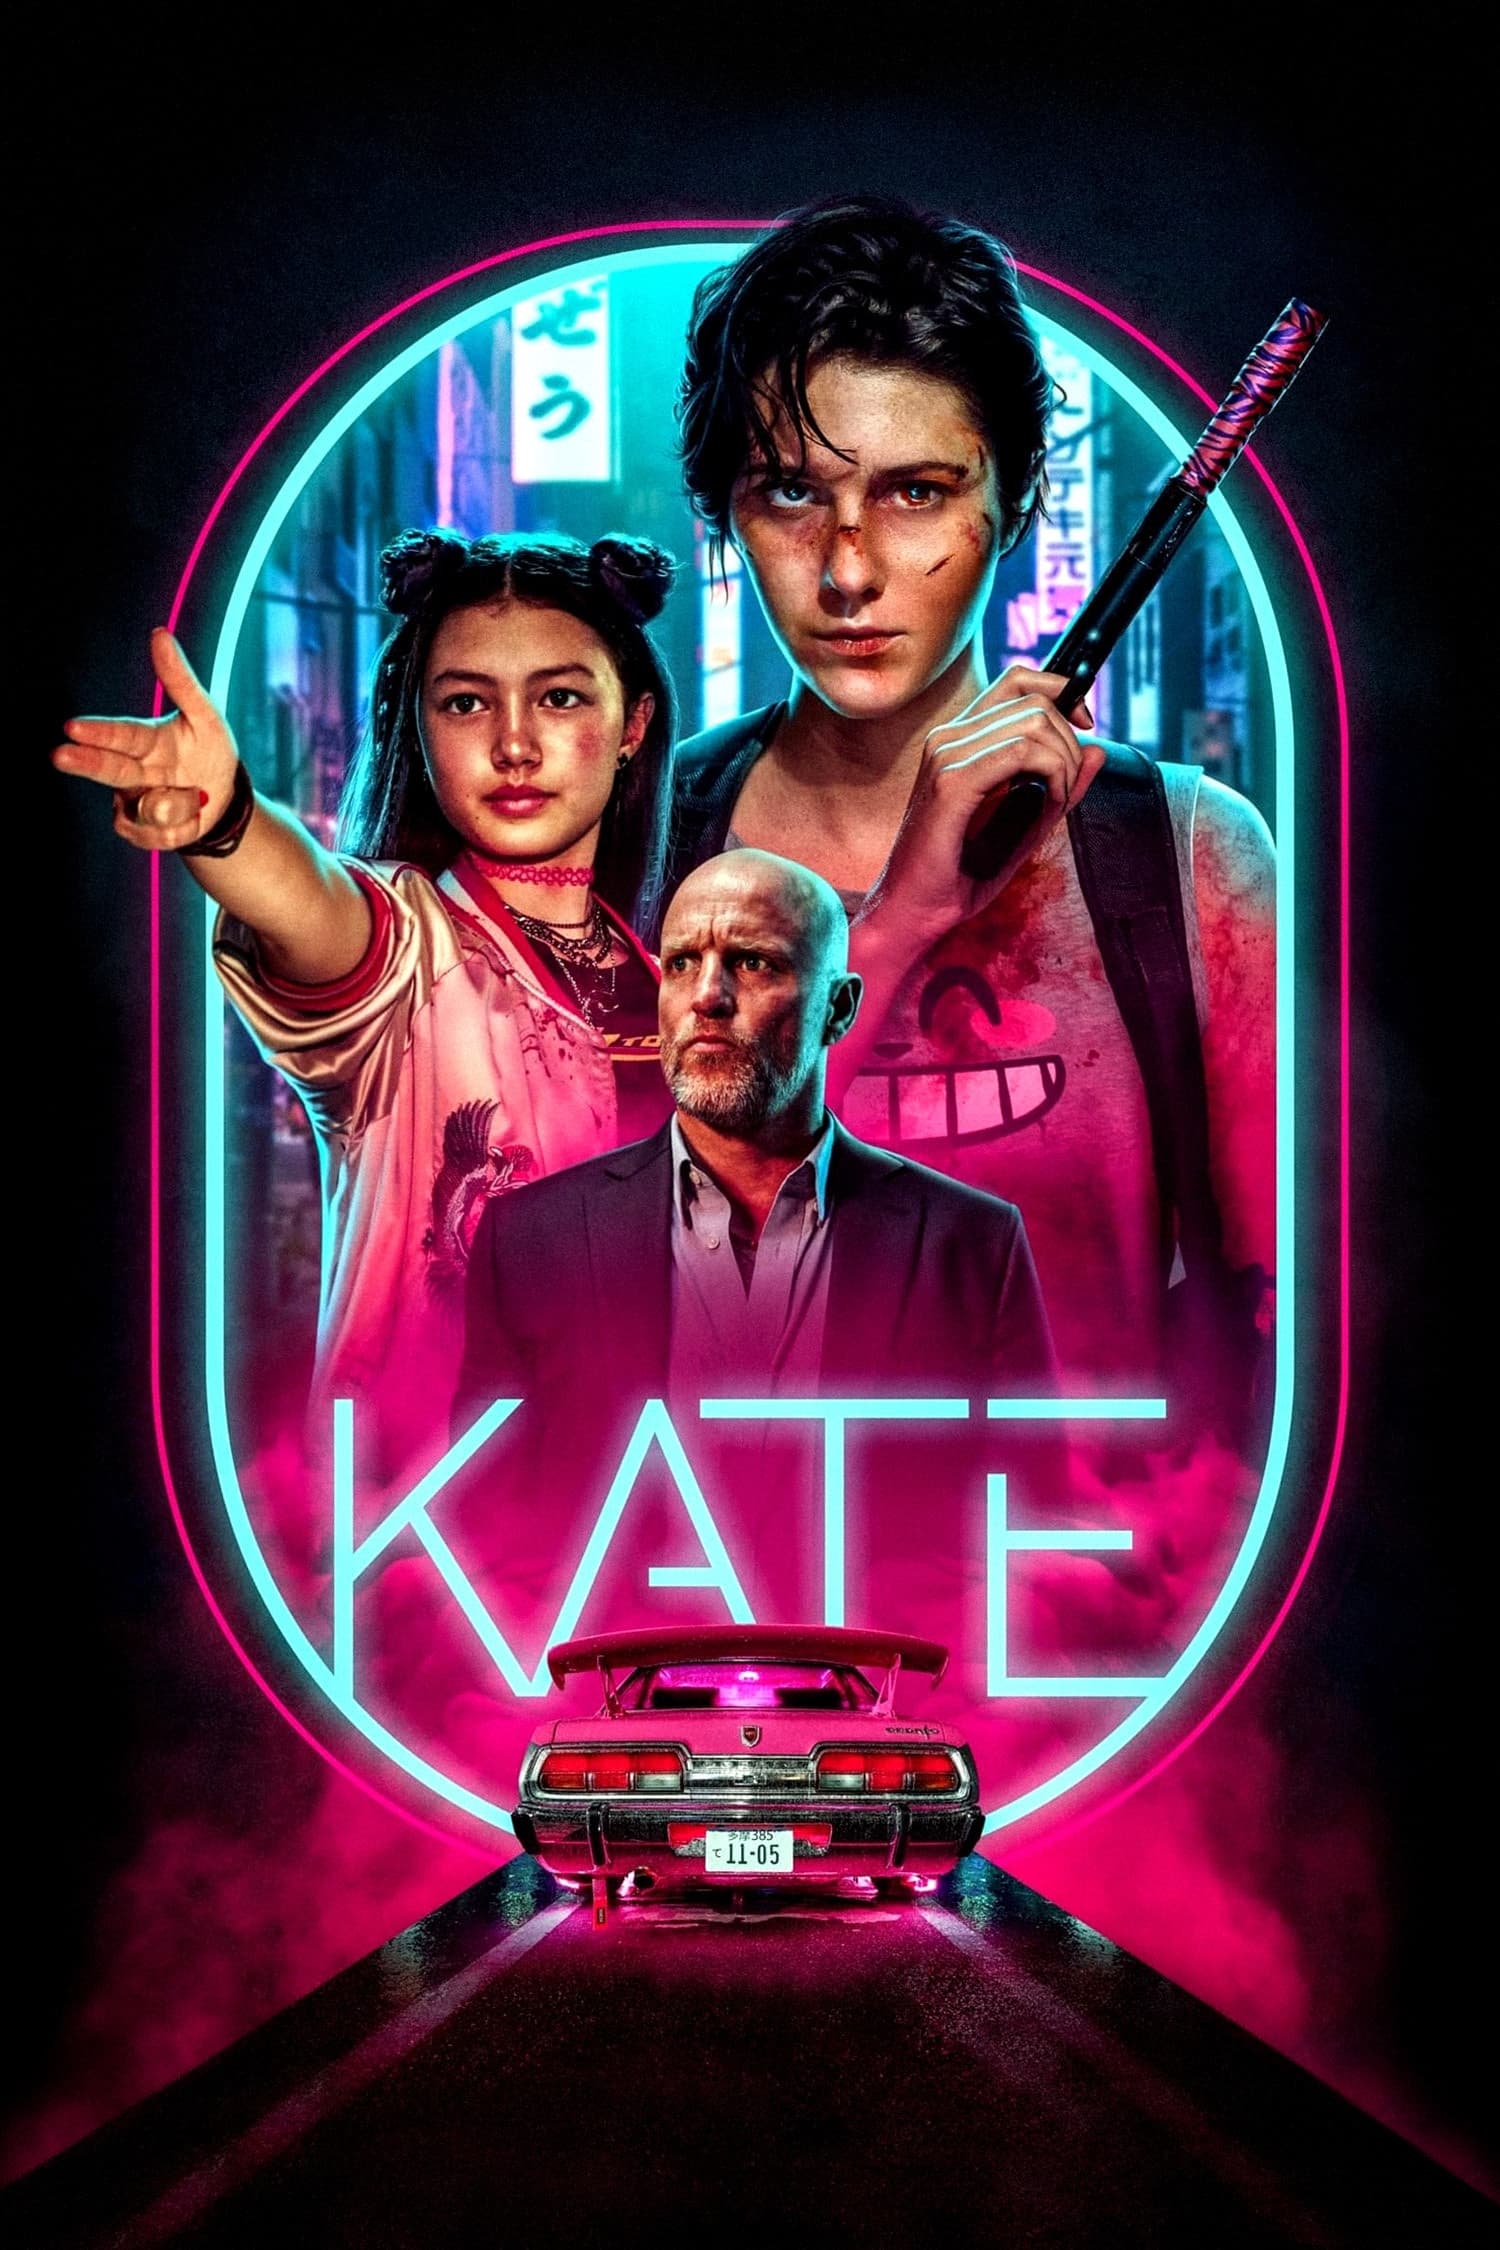 Kate [HD] (2021)